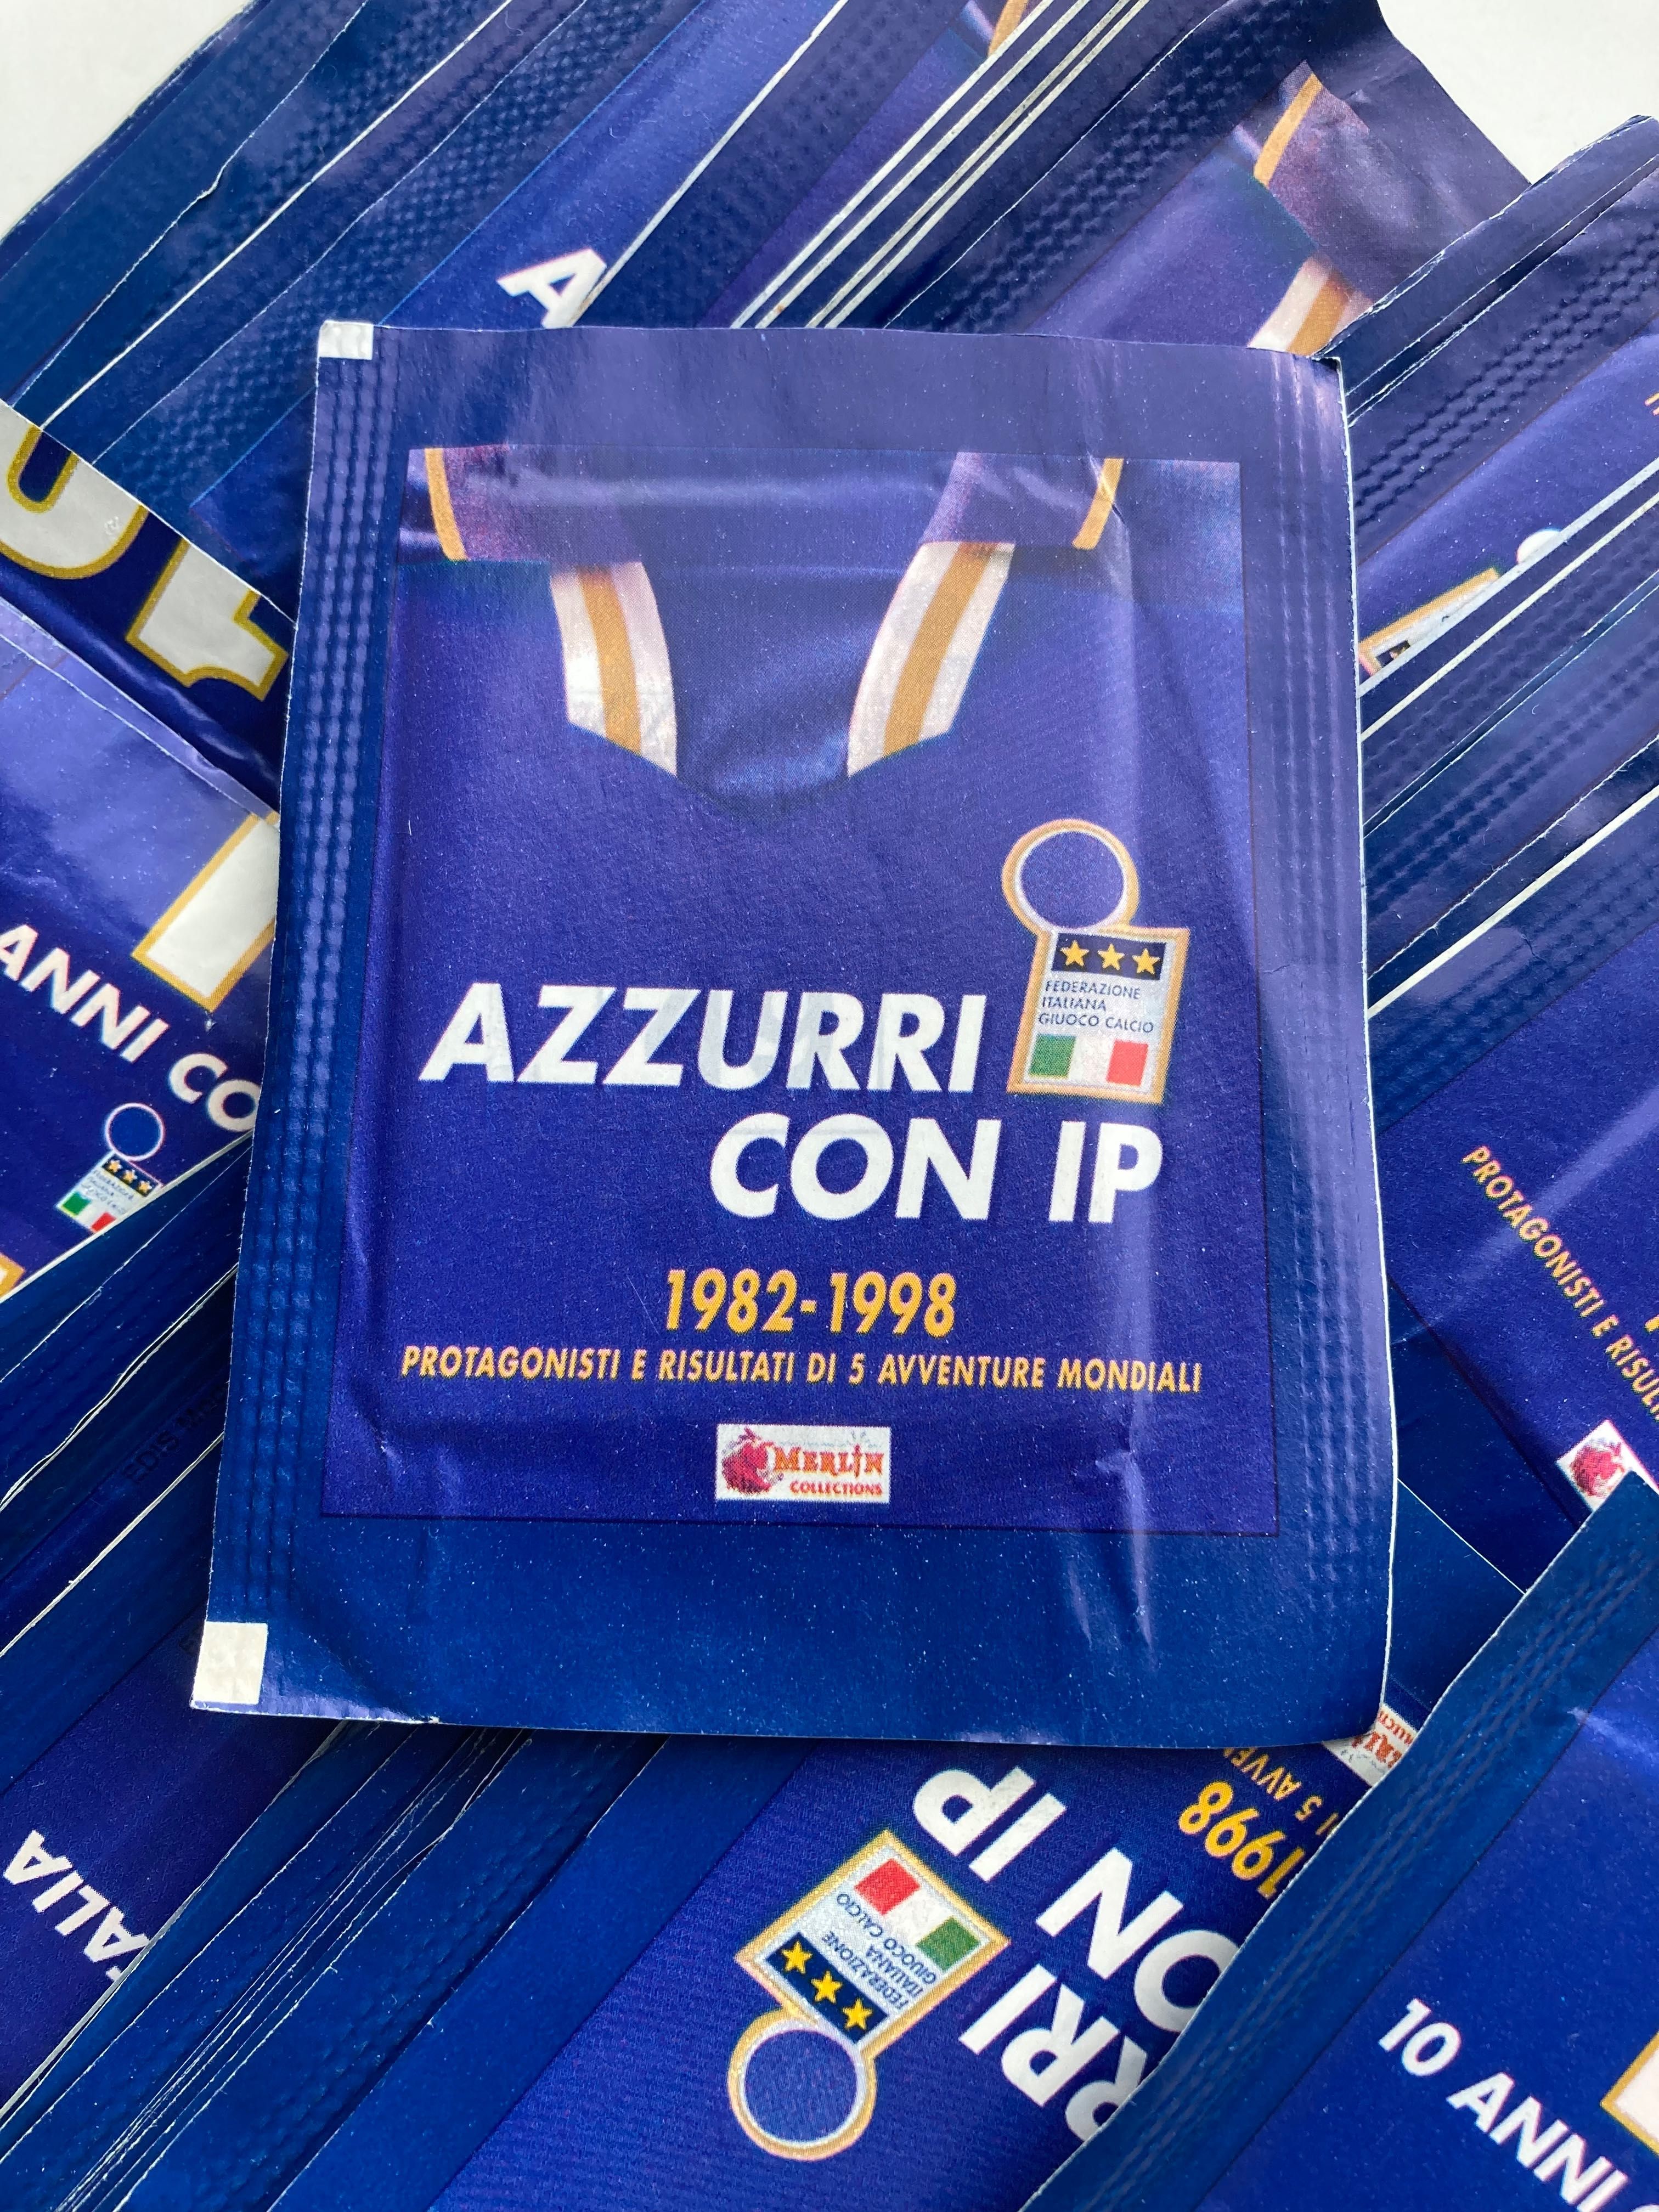 Azzurri Con ip 1982-1998 Panini